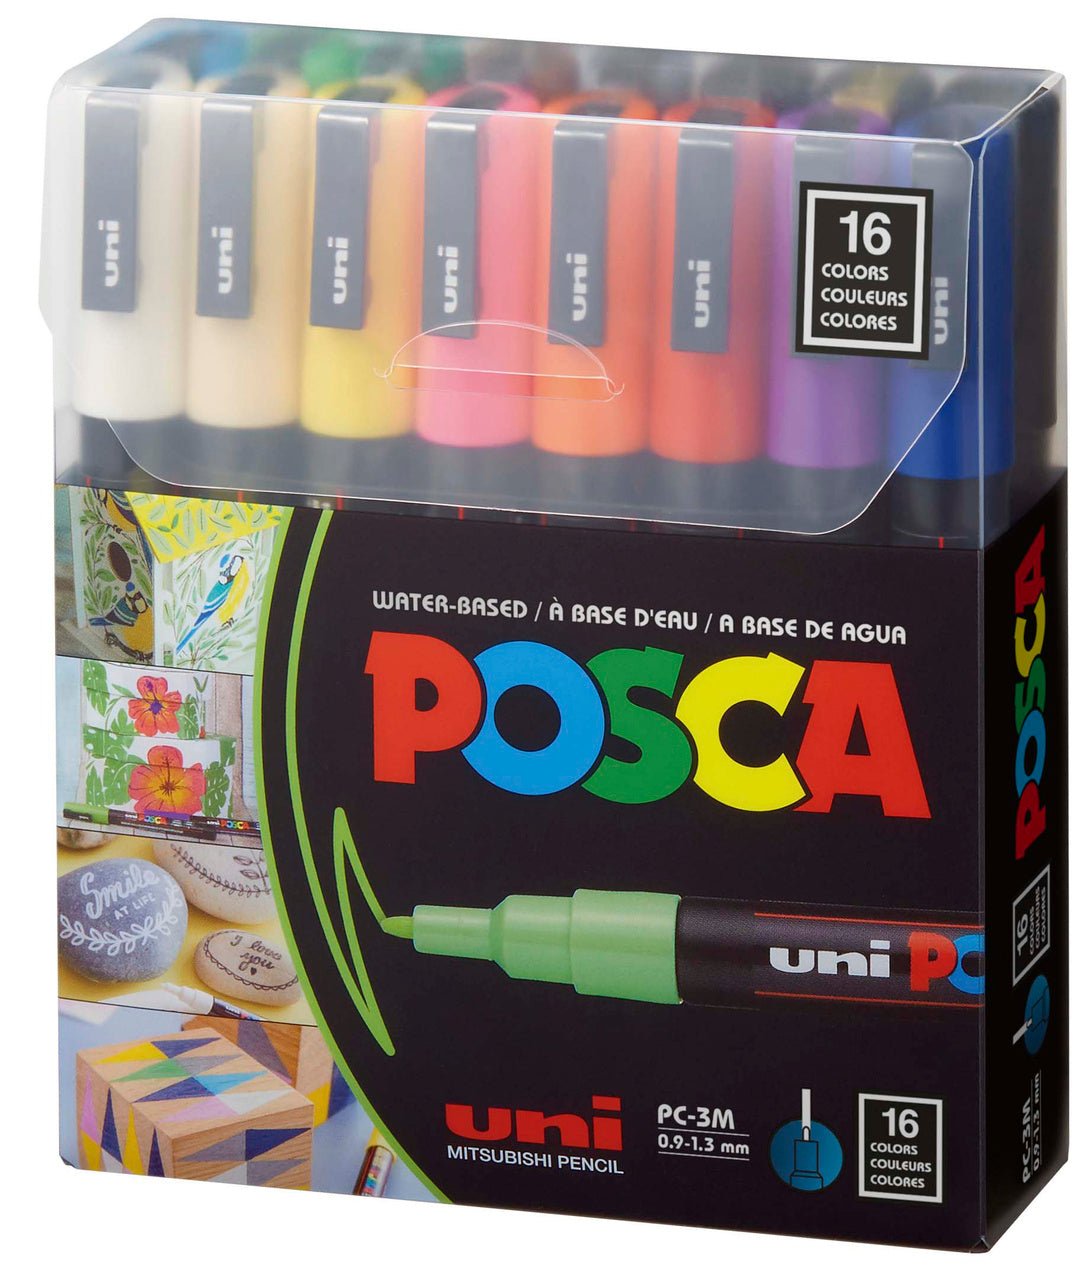 Acrylic Marker Posca, Acrylic Highlighter